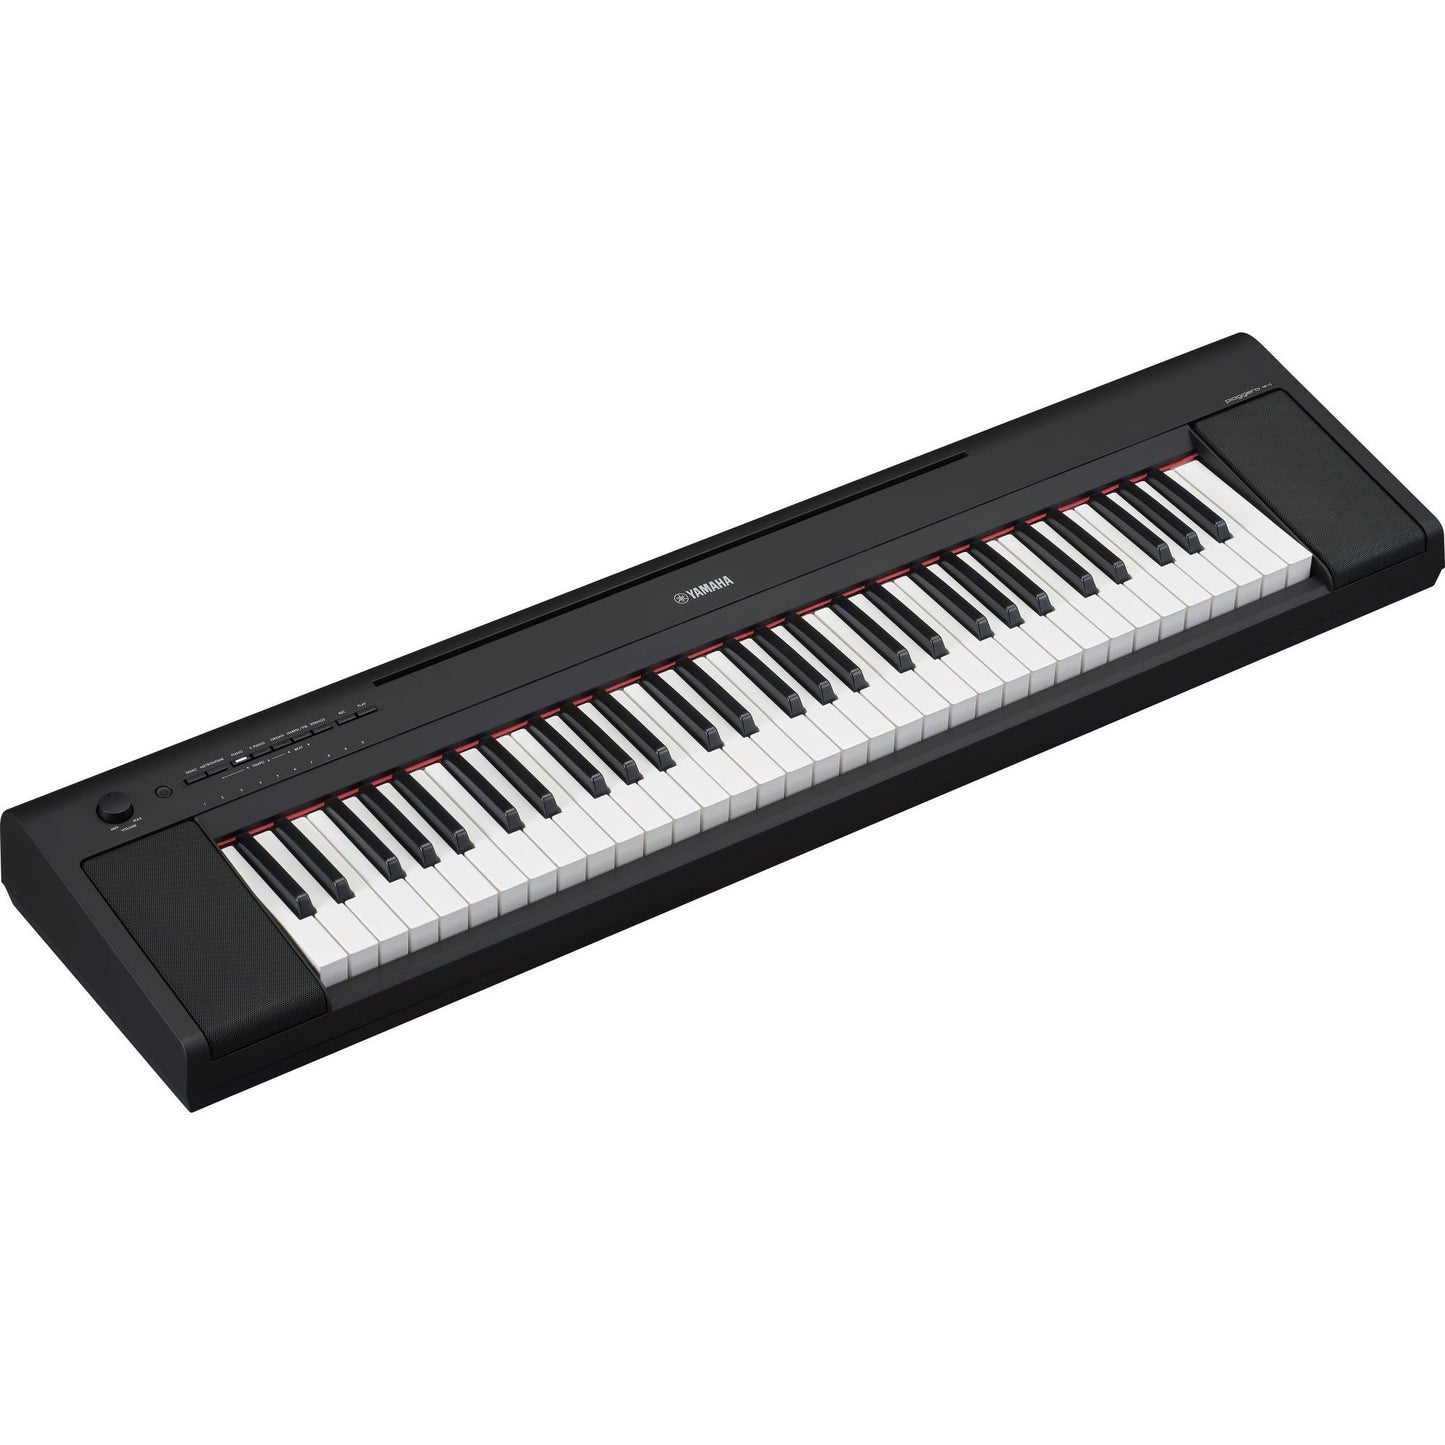 NP-15 Piaggero 61-Key Slimline Home Keyboard in Black